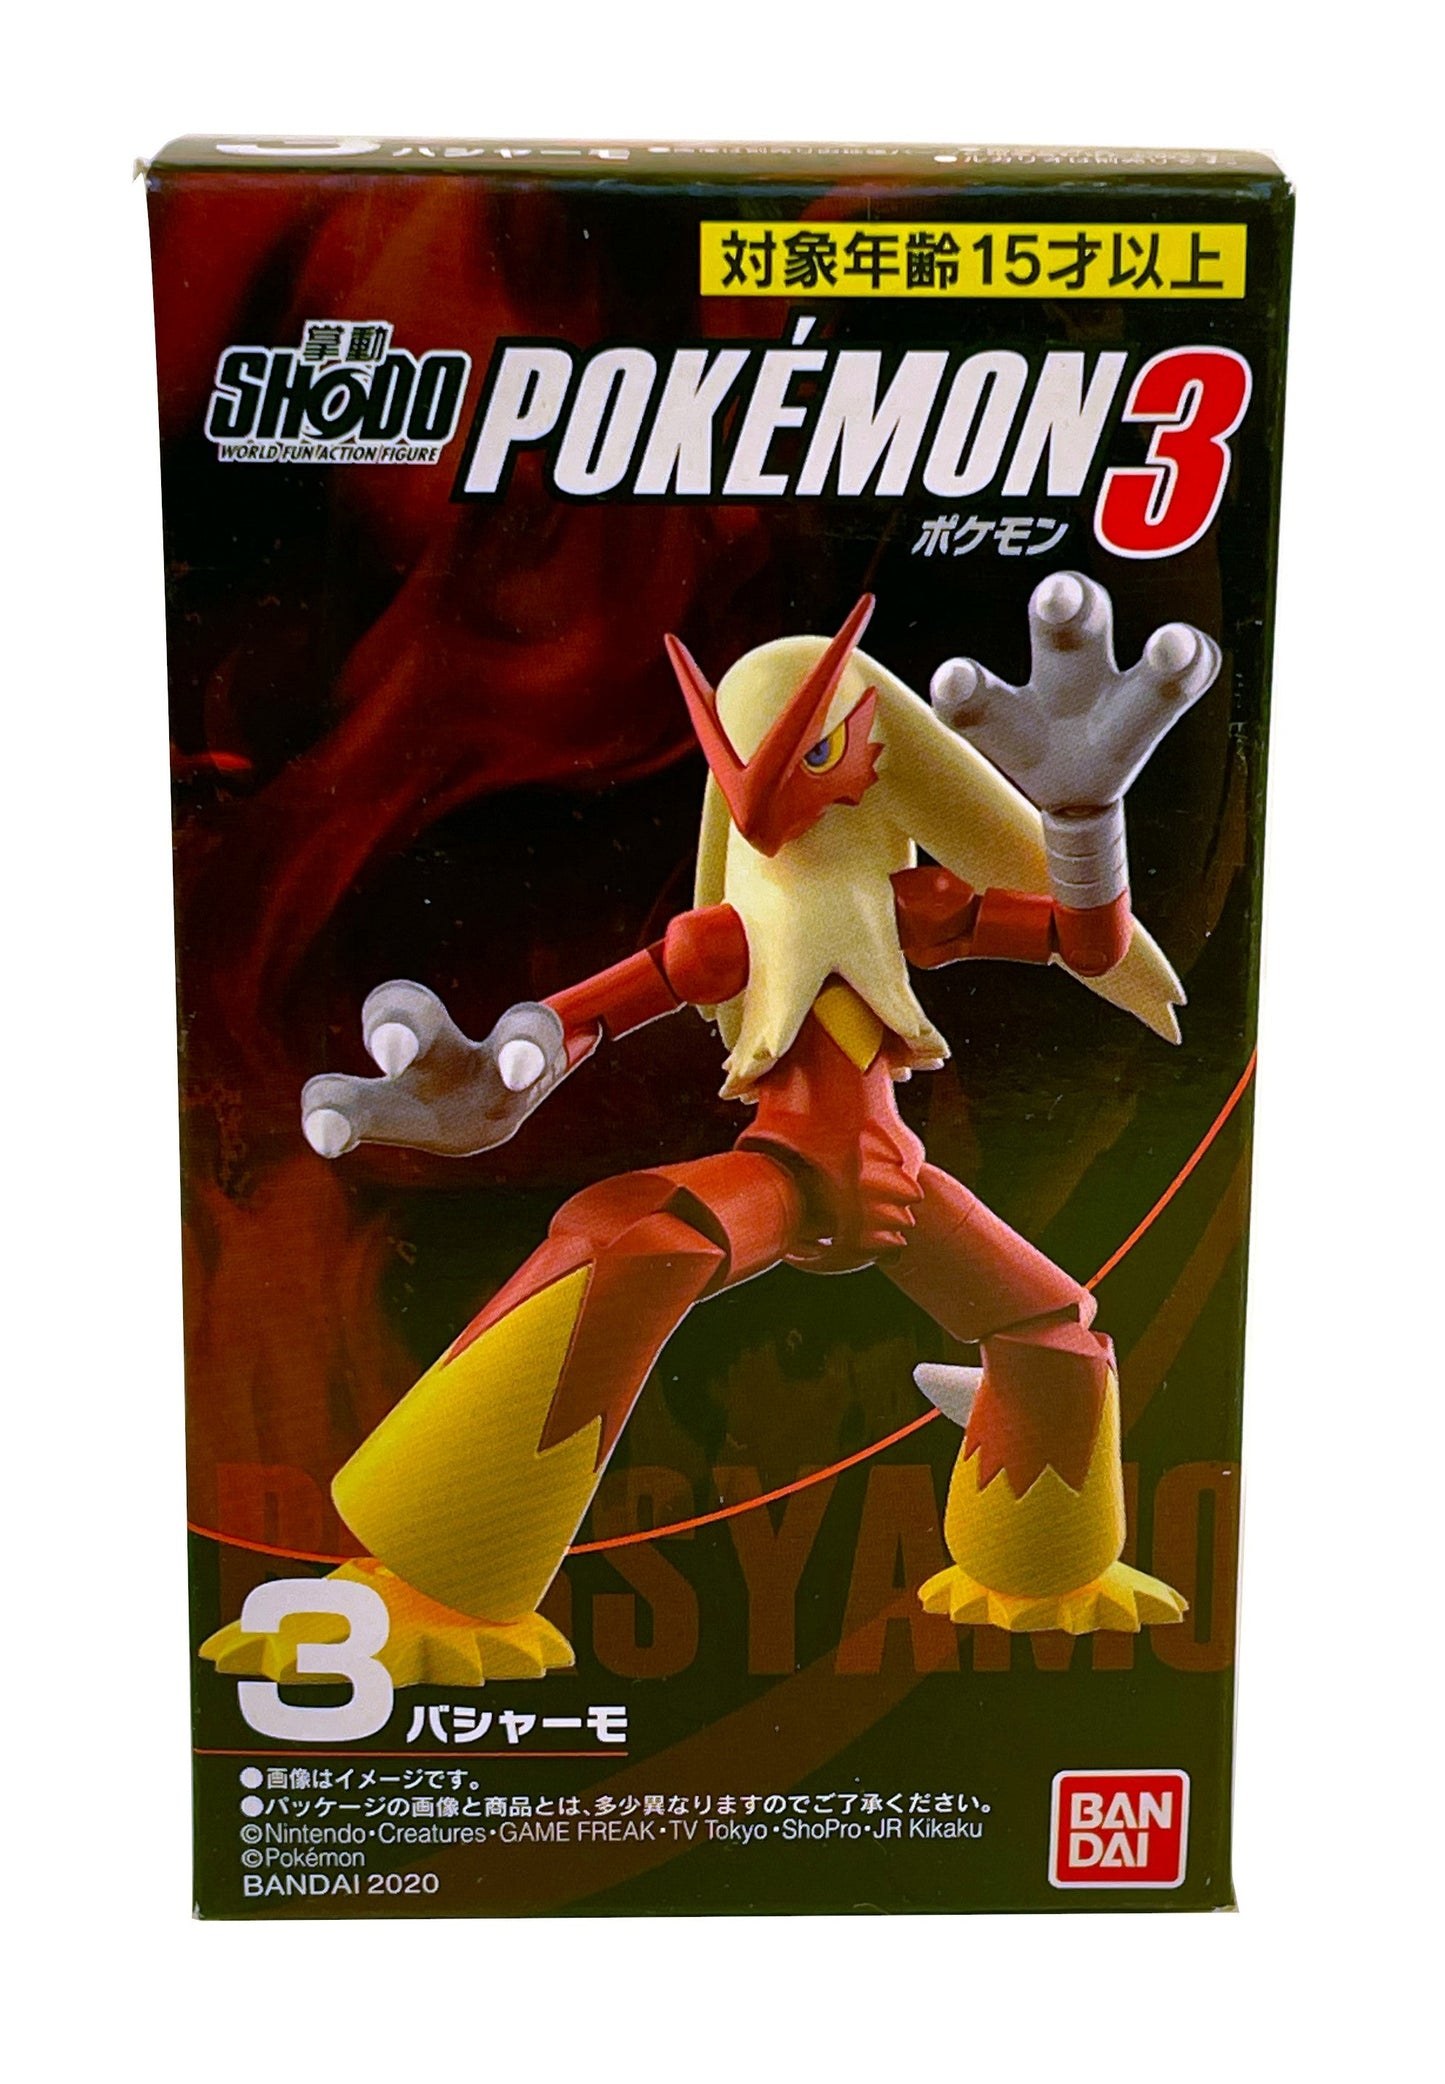 Pokémon Shodo Blaziken Volume 3 Bandai 3" Inch Figure